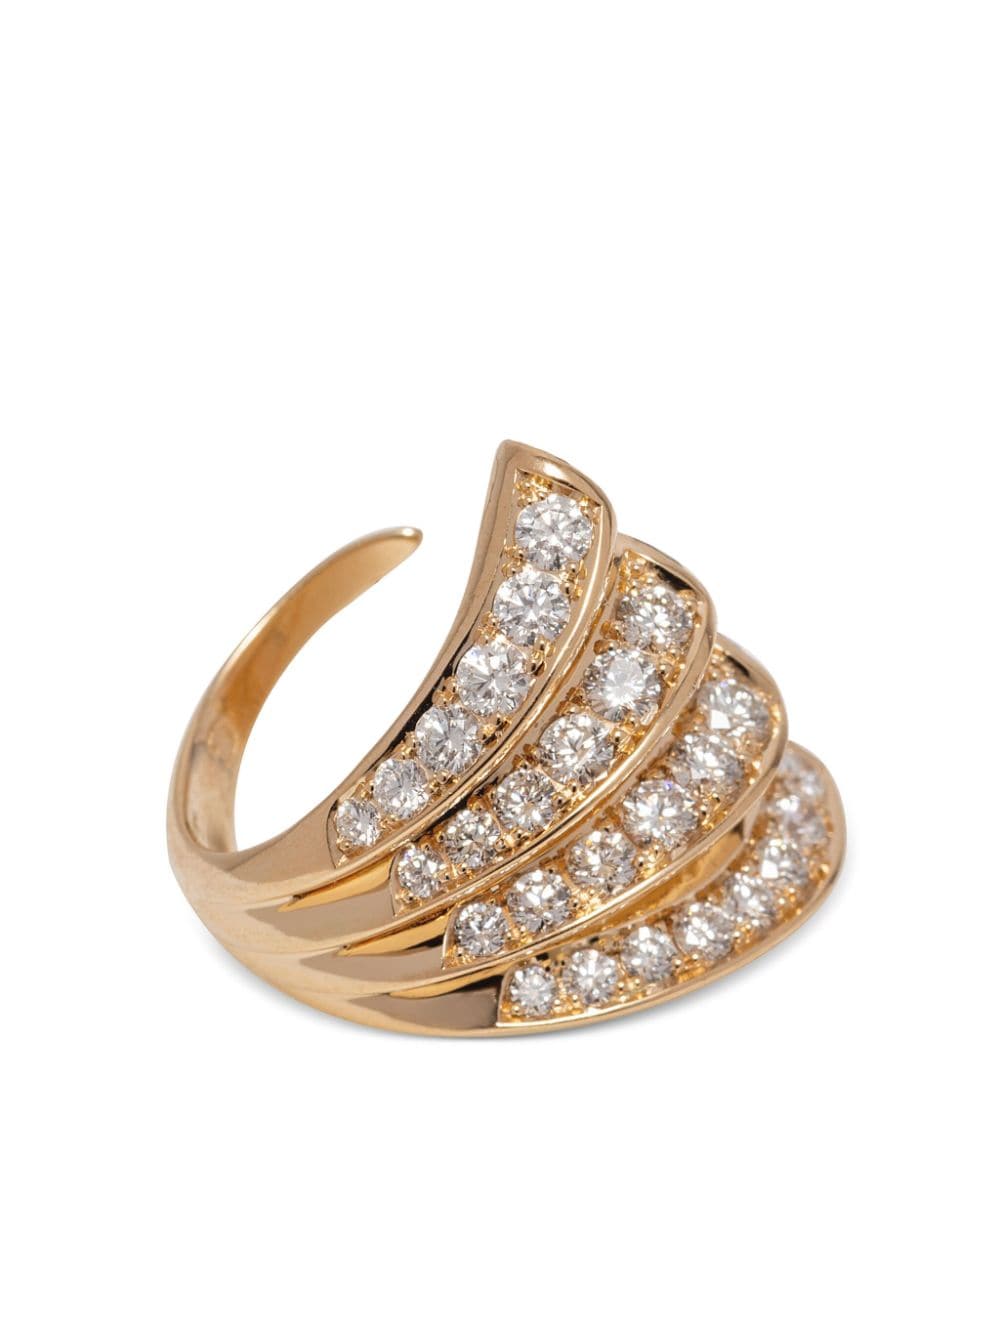 Gaelle Khouri 18kt rose gold Nuances diamond ring - Pink von Gaelle Khouri